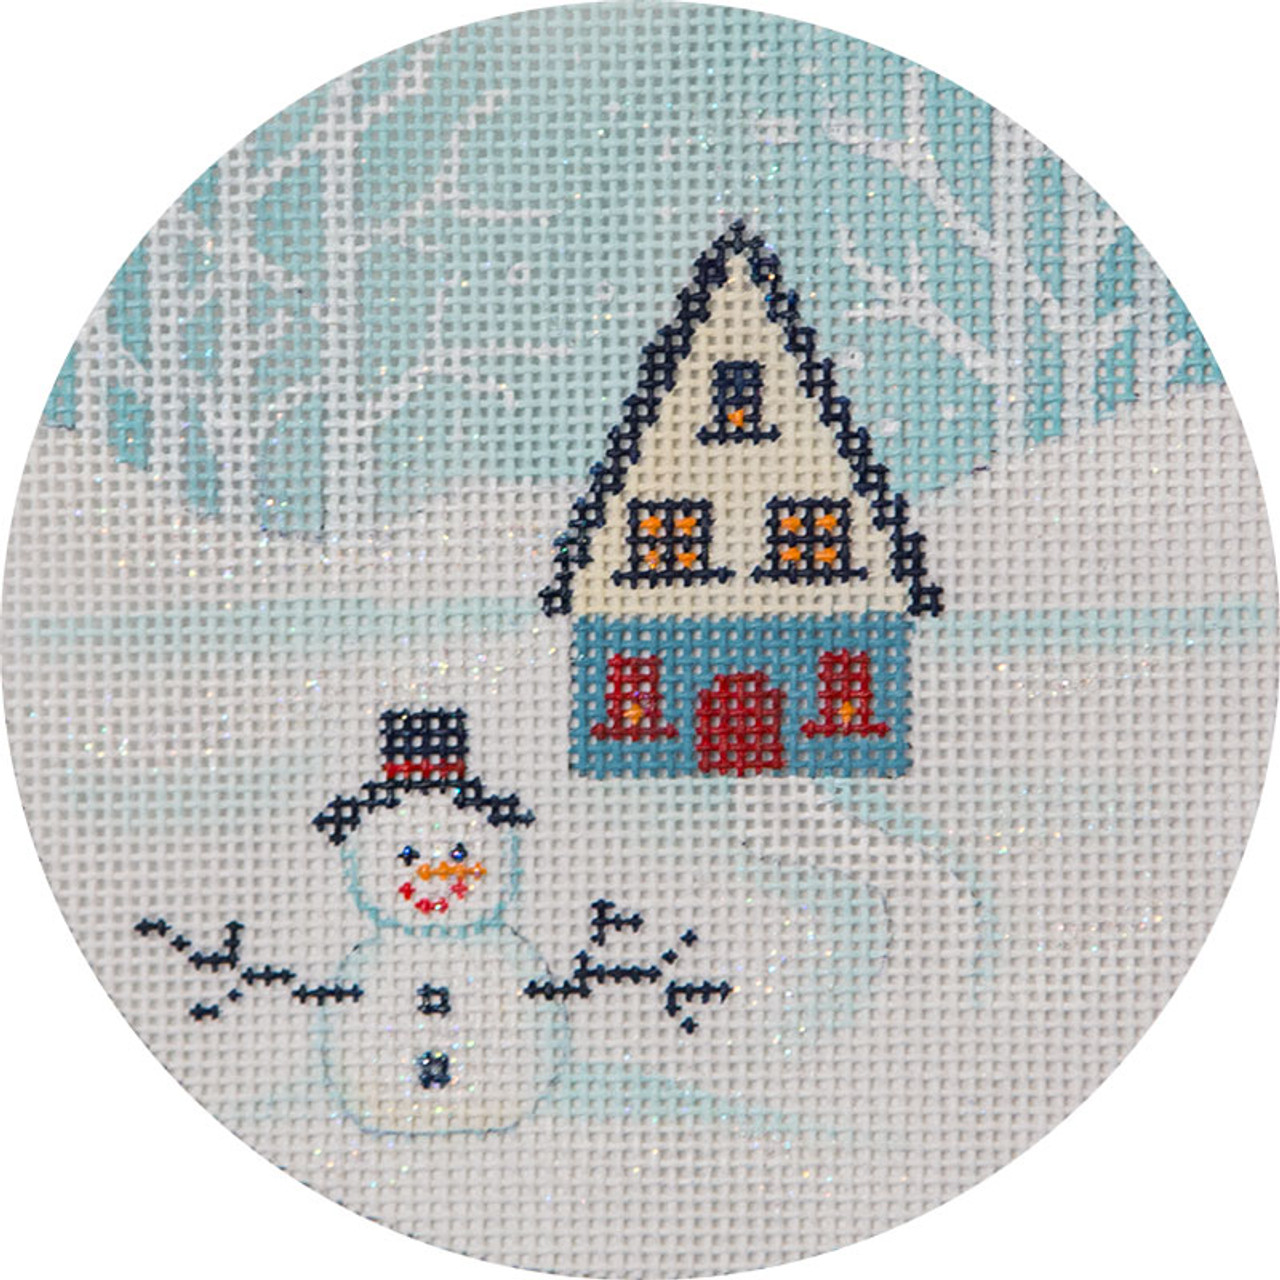 Frosty the Snowman iPhone 6 Plus Case by Carolyn Fox - Pixels